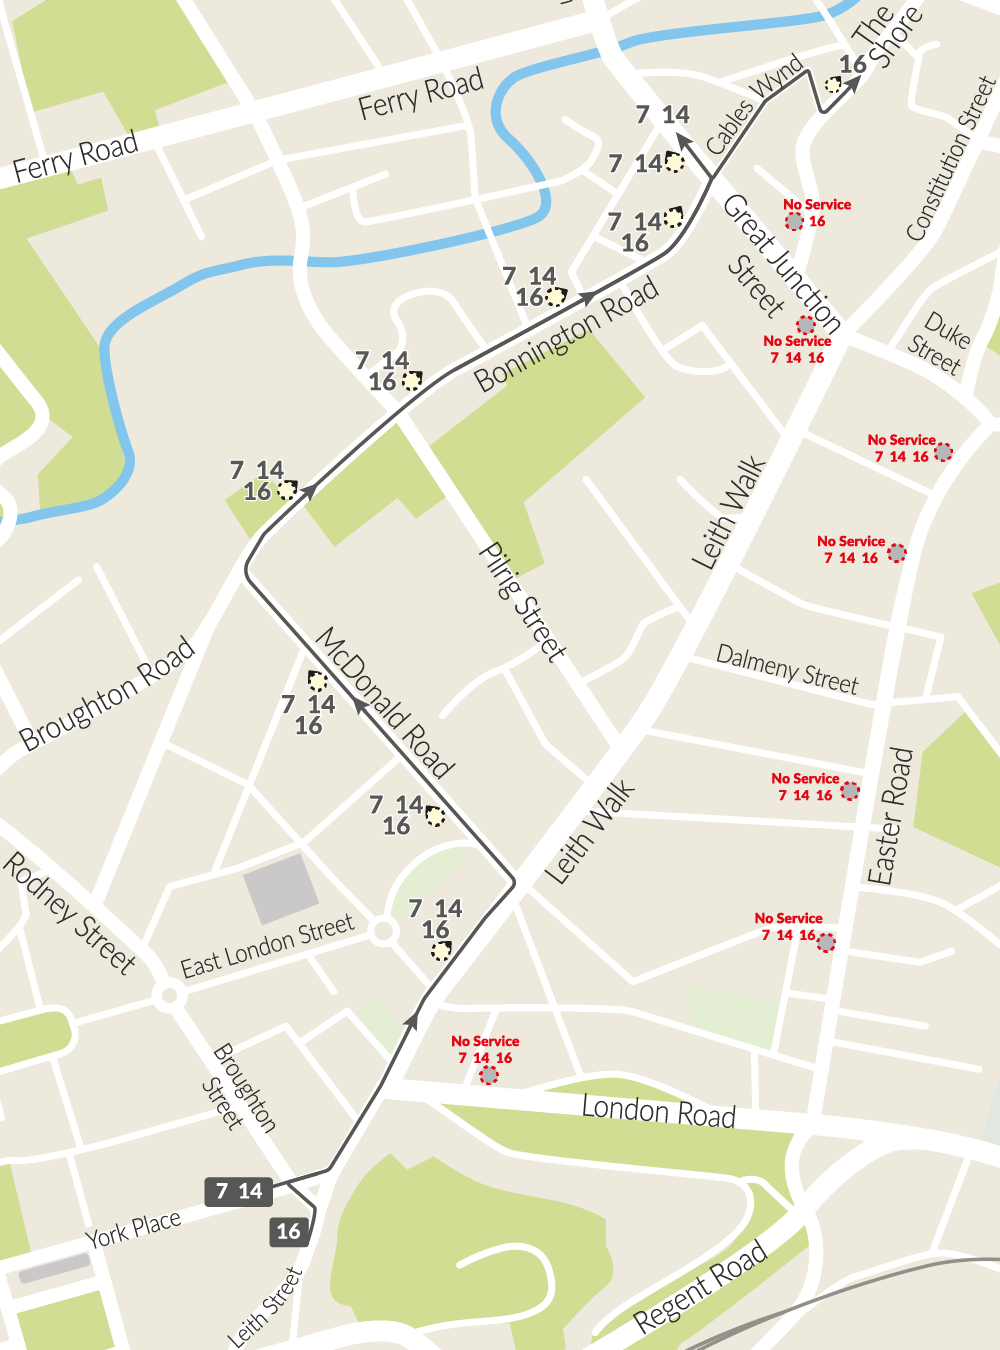 The 7,14,16 diversion route towards The Shore via McDonald Road and Bonnington Road